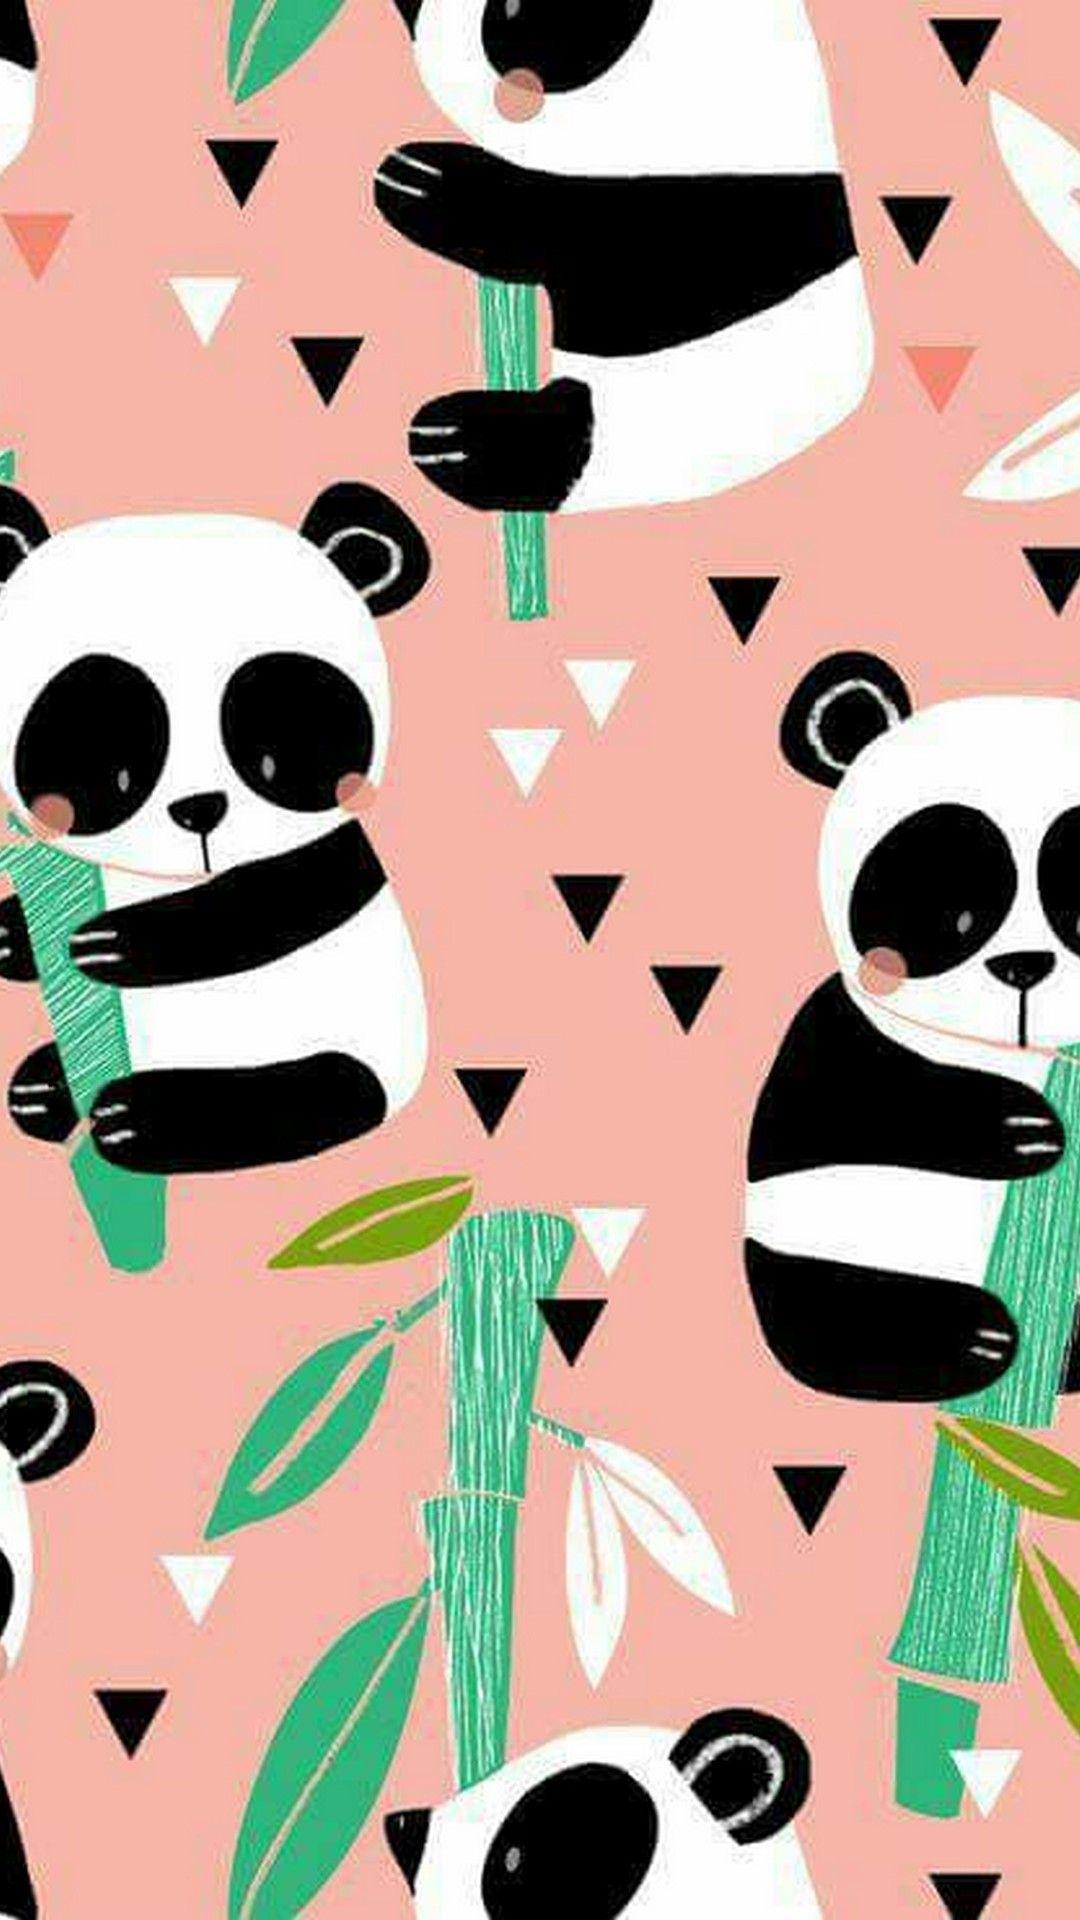 Kawaii Pink Panda Wallpapers - Wallpaper Cave